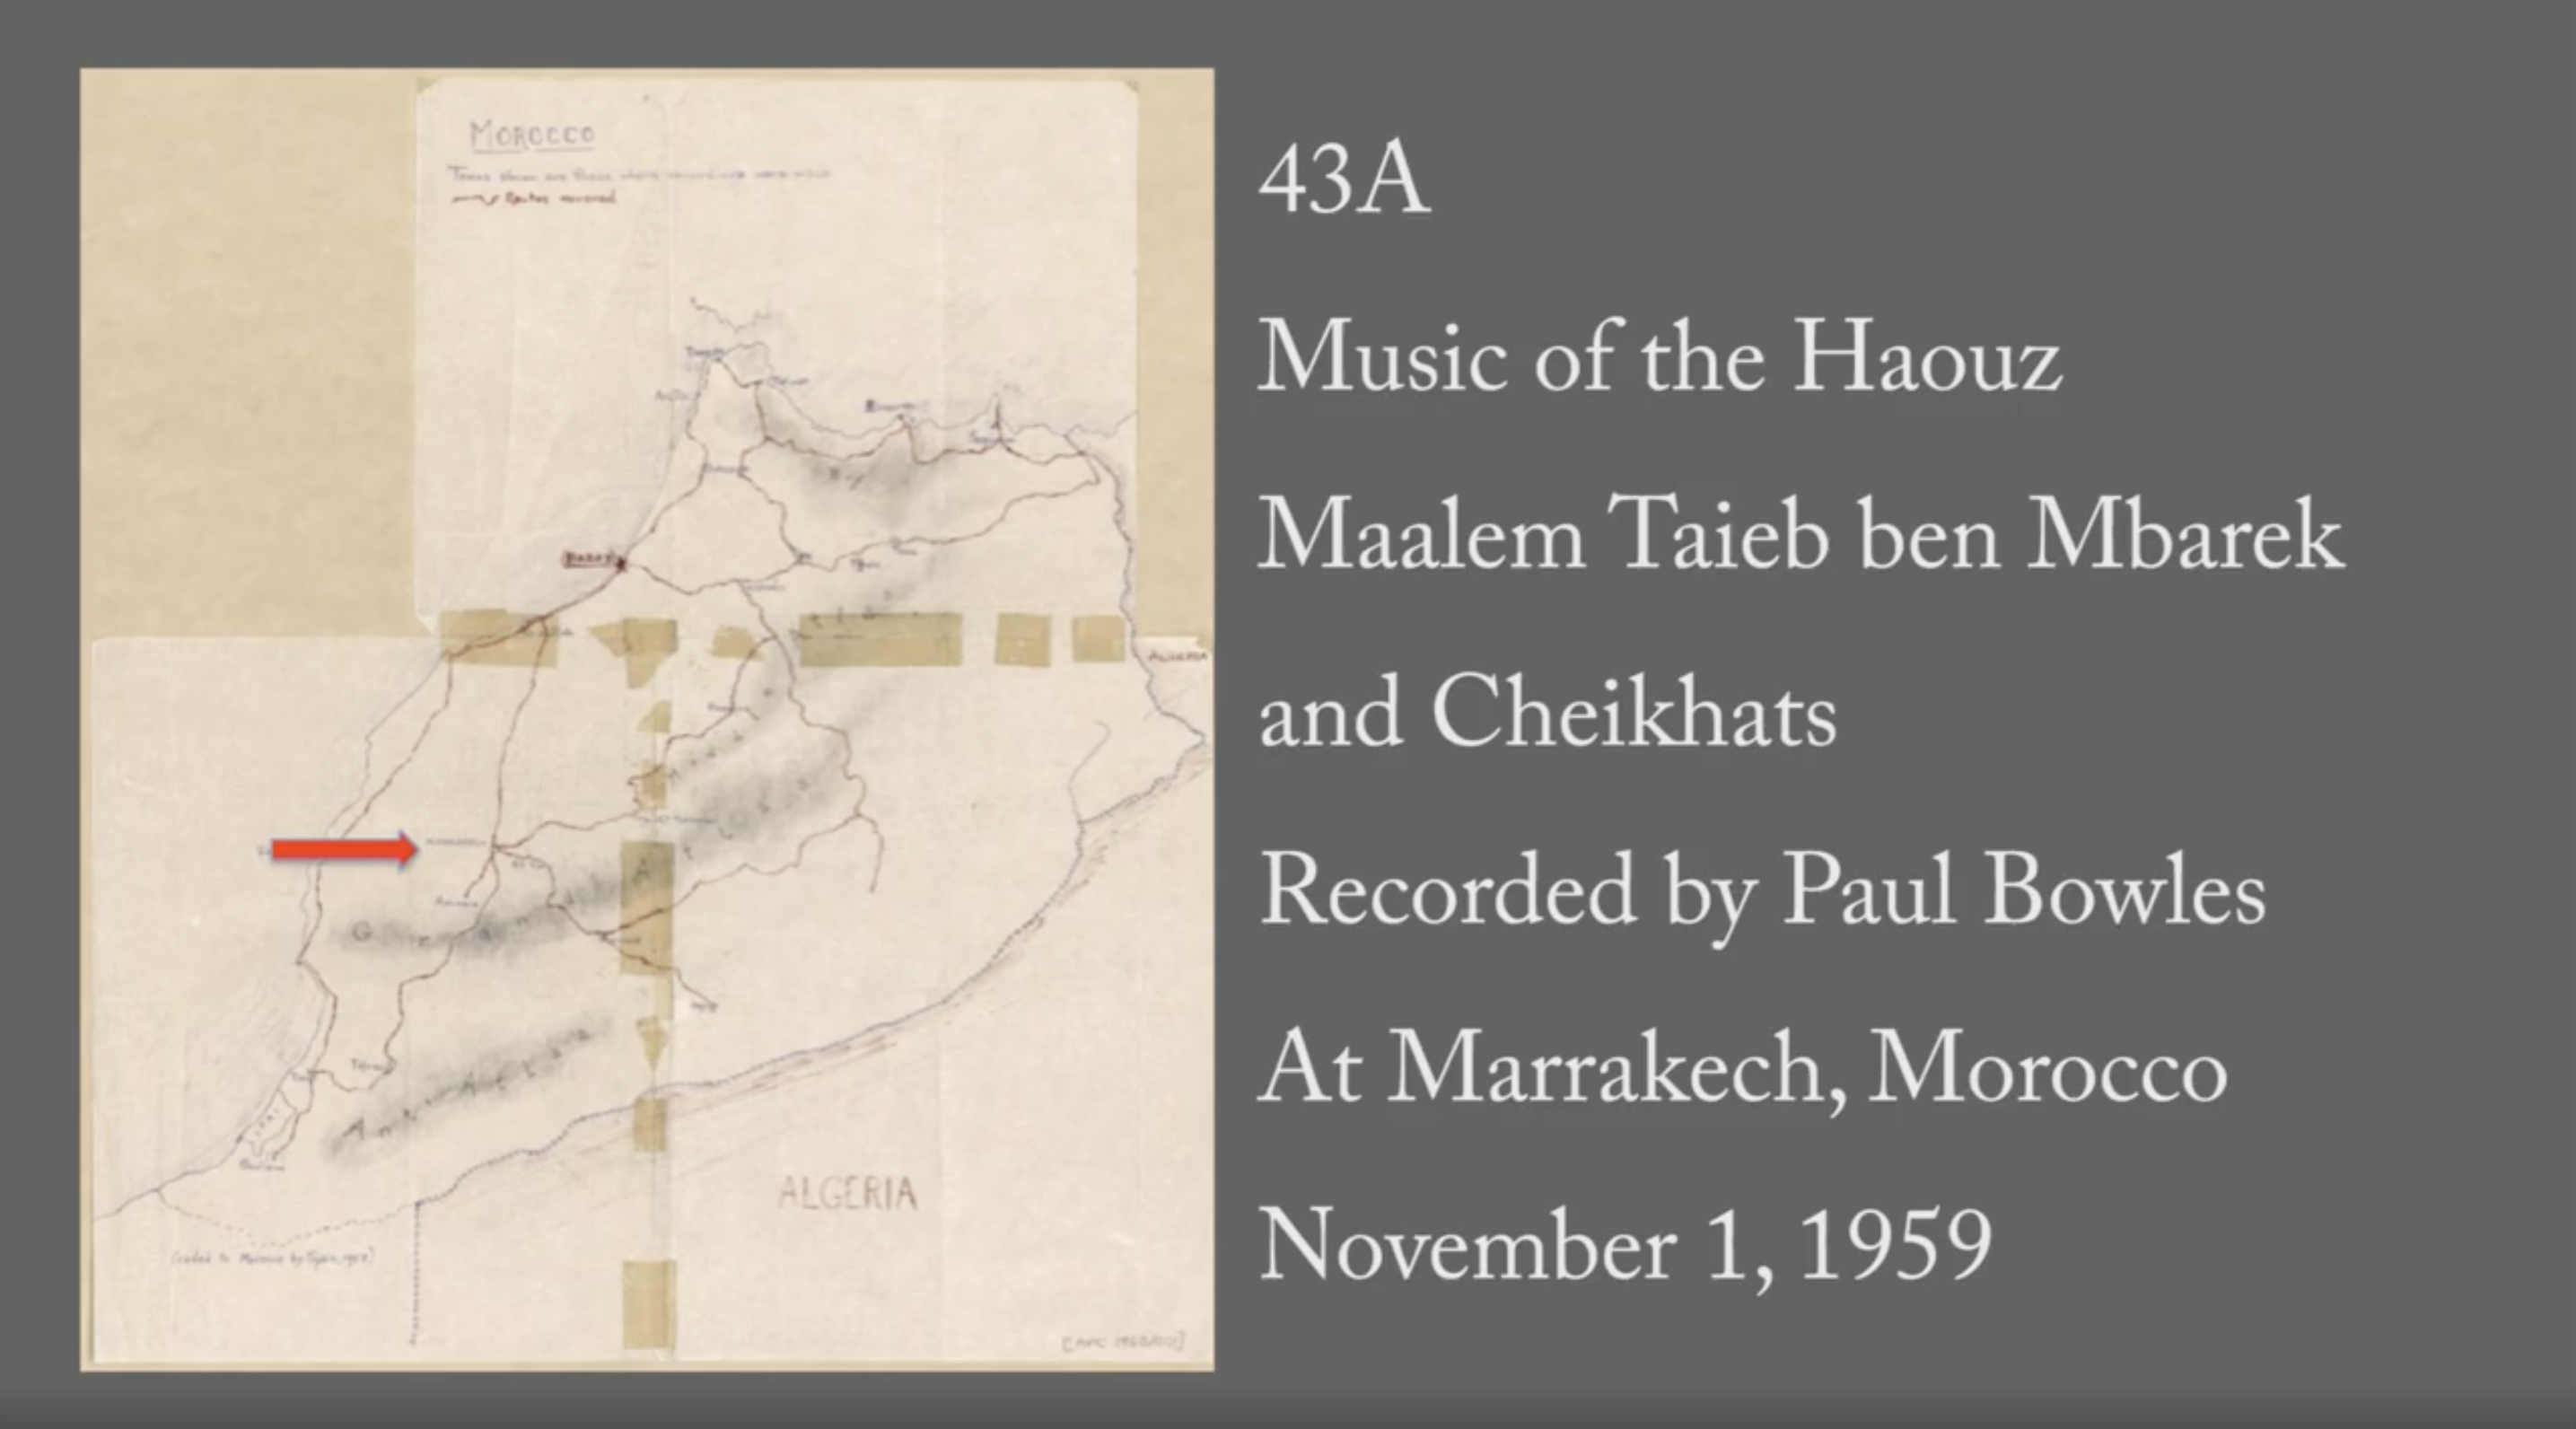 43A: "Maalem Taieb ben Mbarek" (Music of the Haouz)